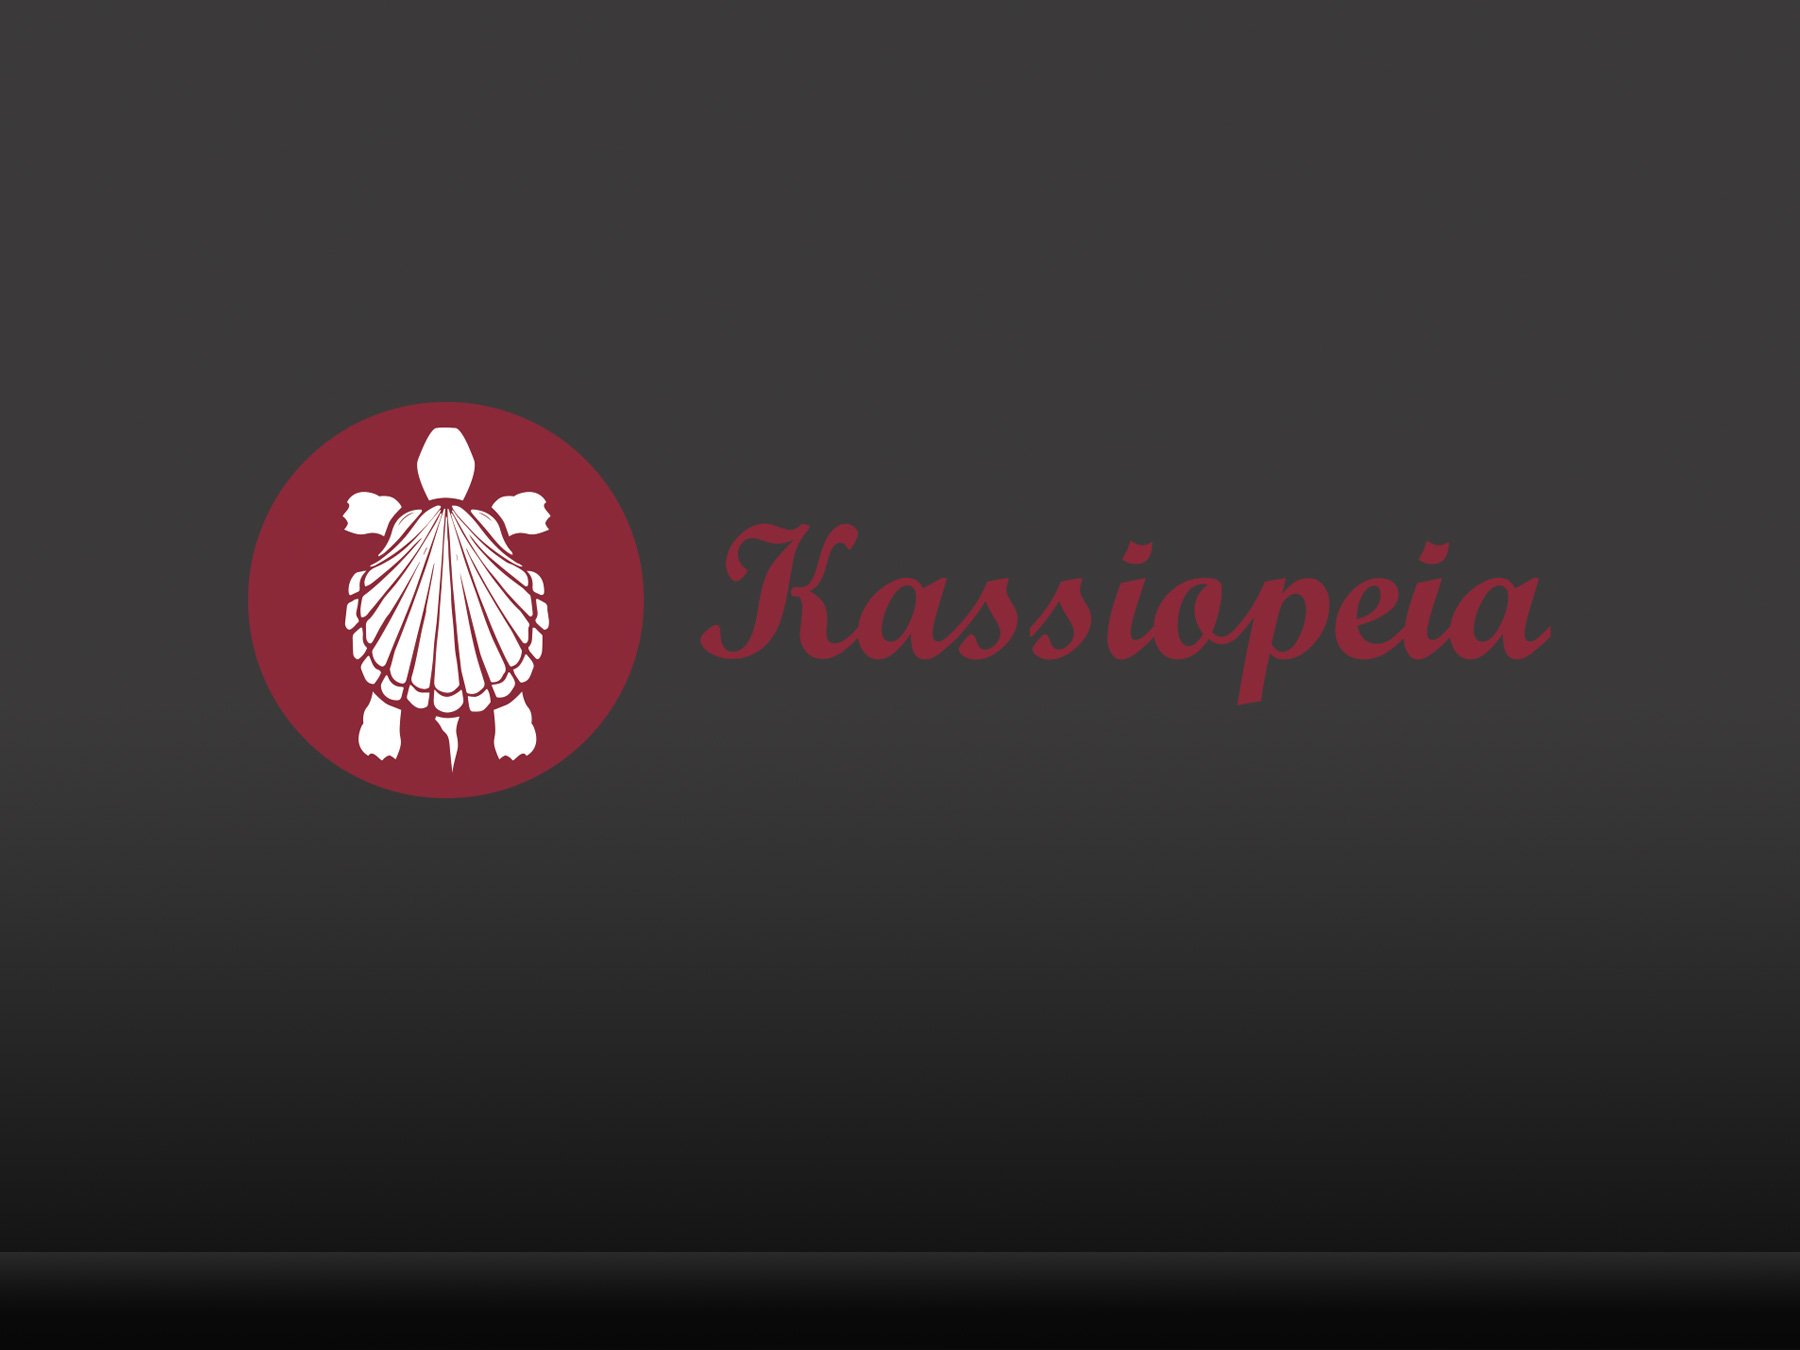 Café Kassiopeia